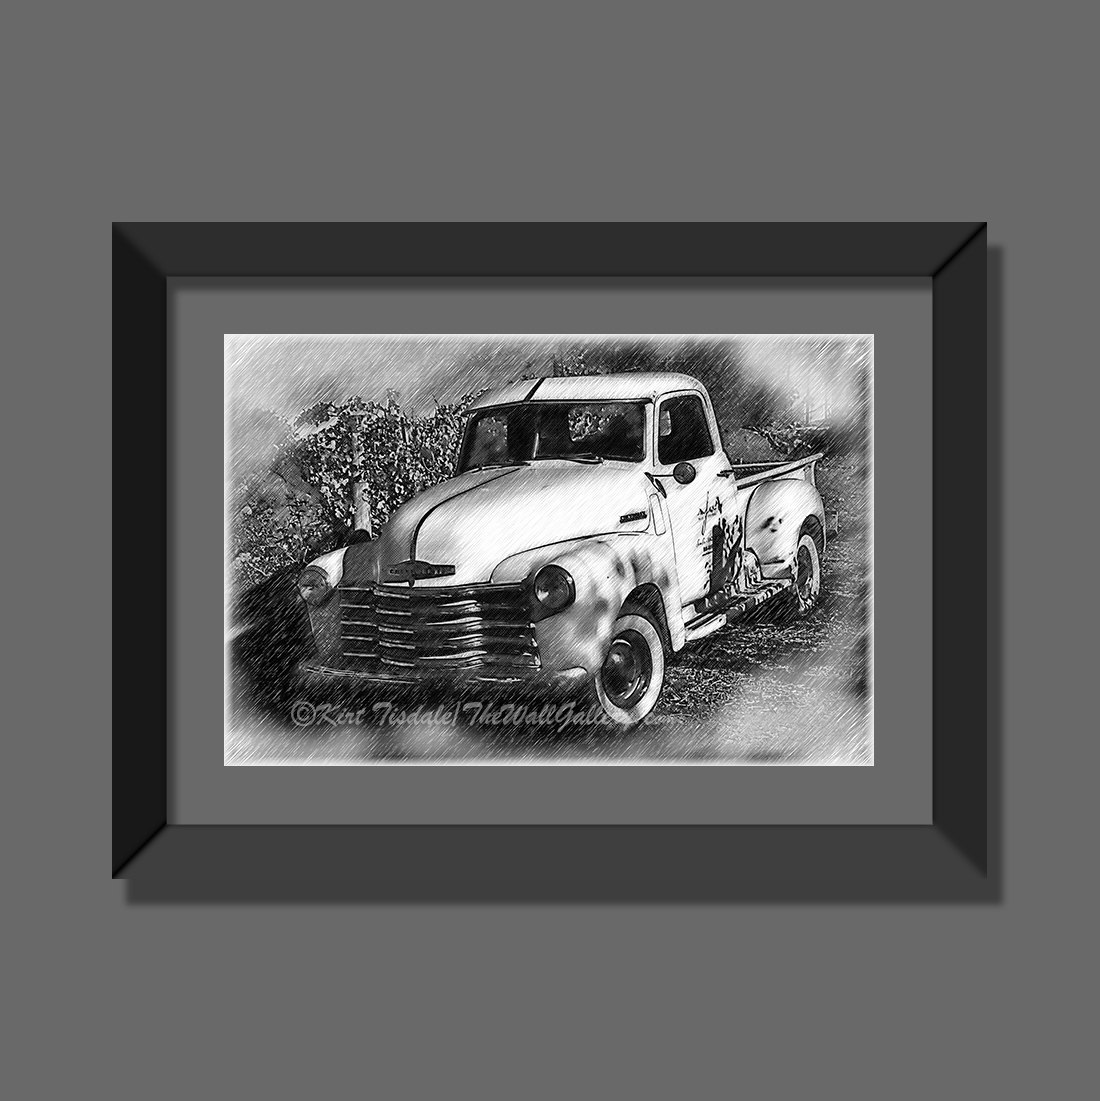 The Chevy Truck by Kirt Tisdale thewallgallery.com/black-and-whit… #thewallgallery #art #wallart #artprint #artwork #artist #artforsale #sketching #sketches